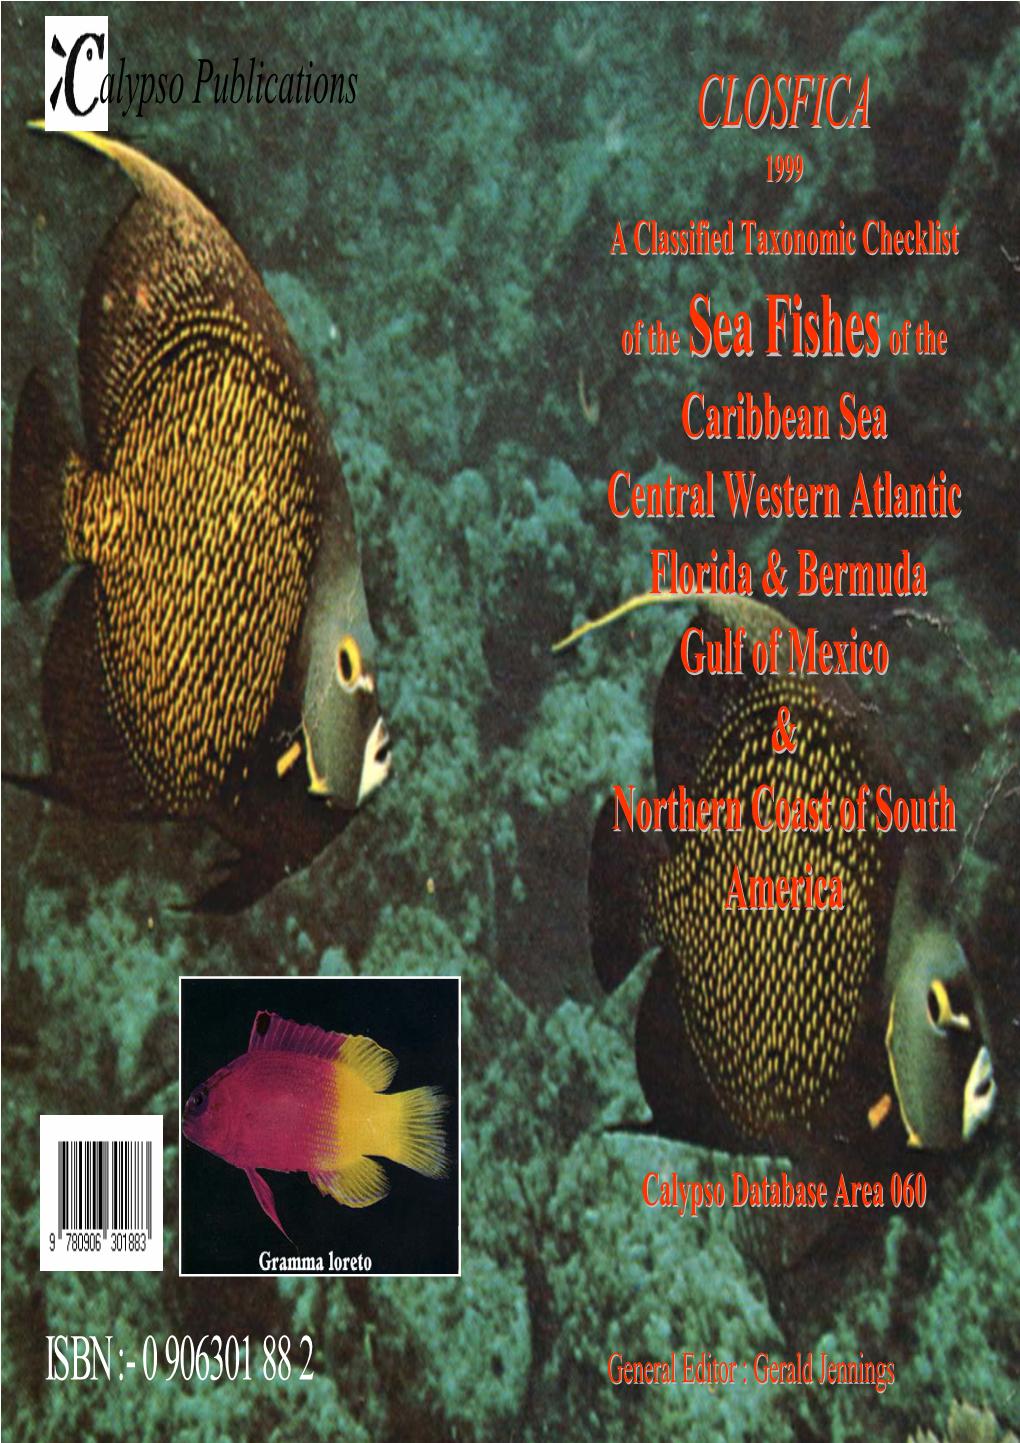 CLOSFICA 1999 Sea Fishes of the Western Central Atlantic. Carolinas